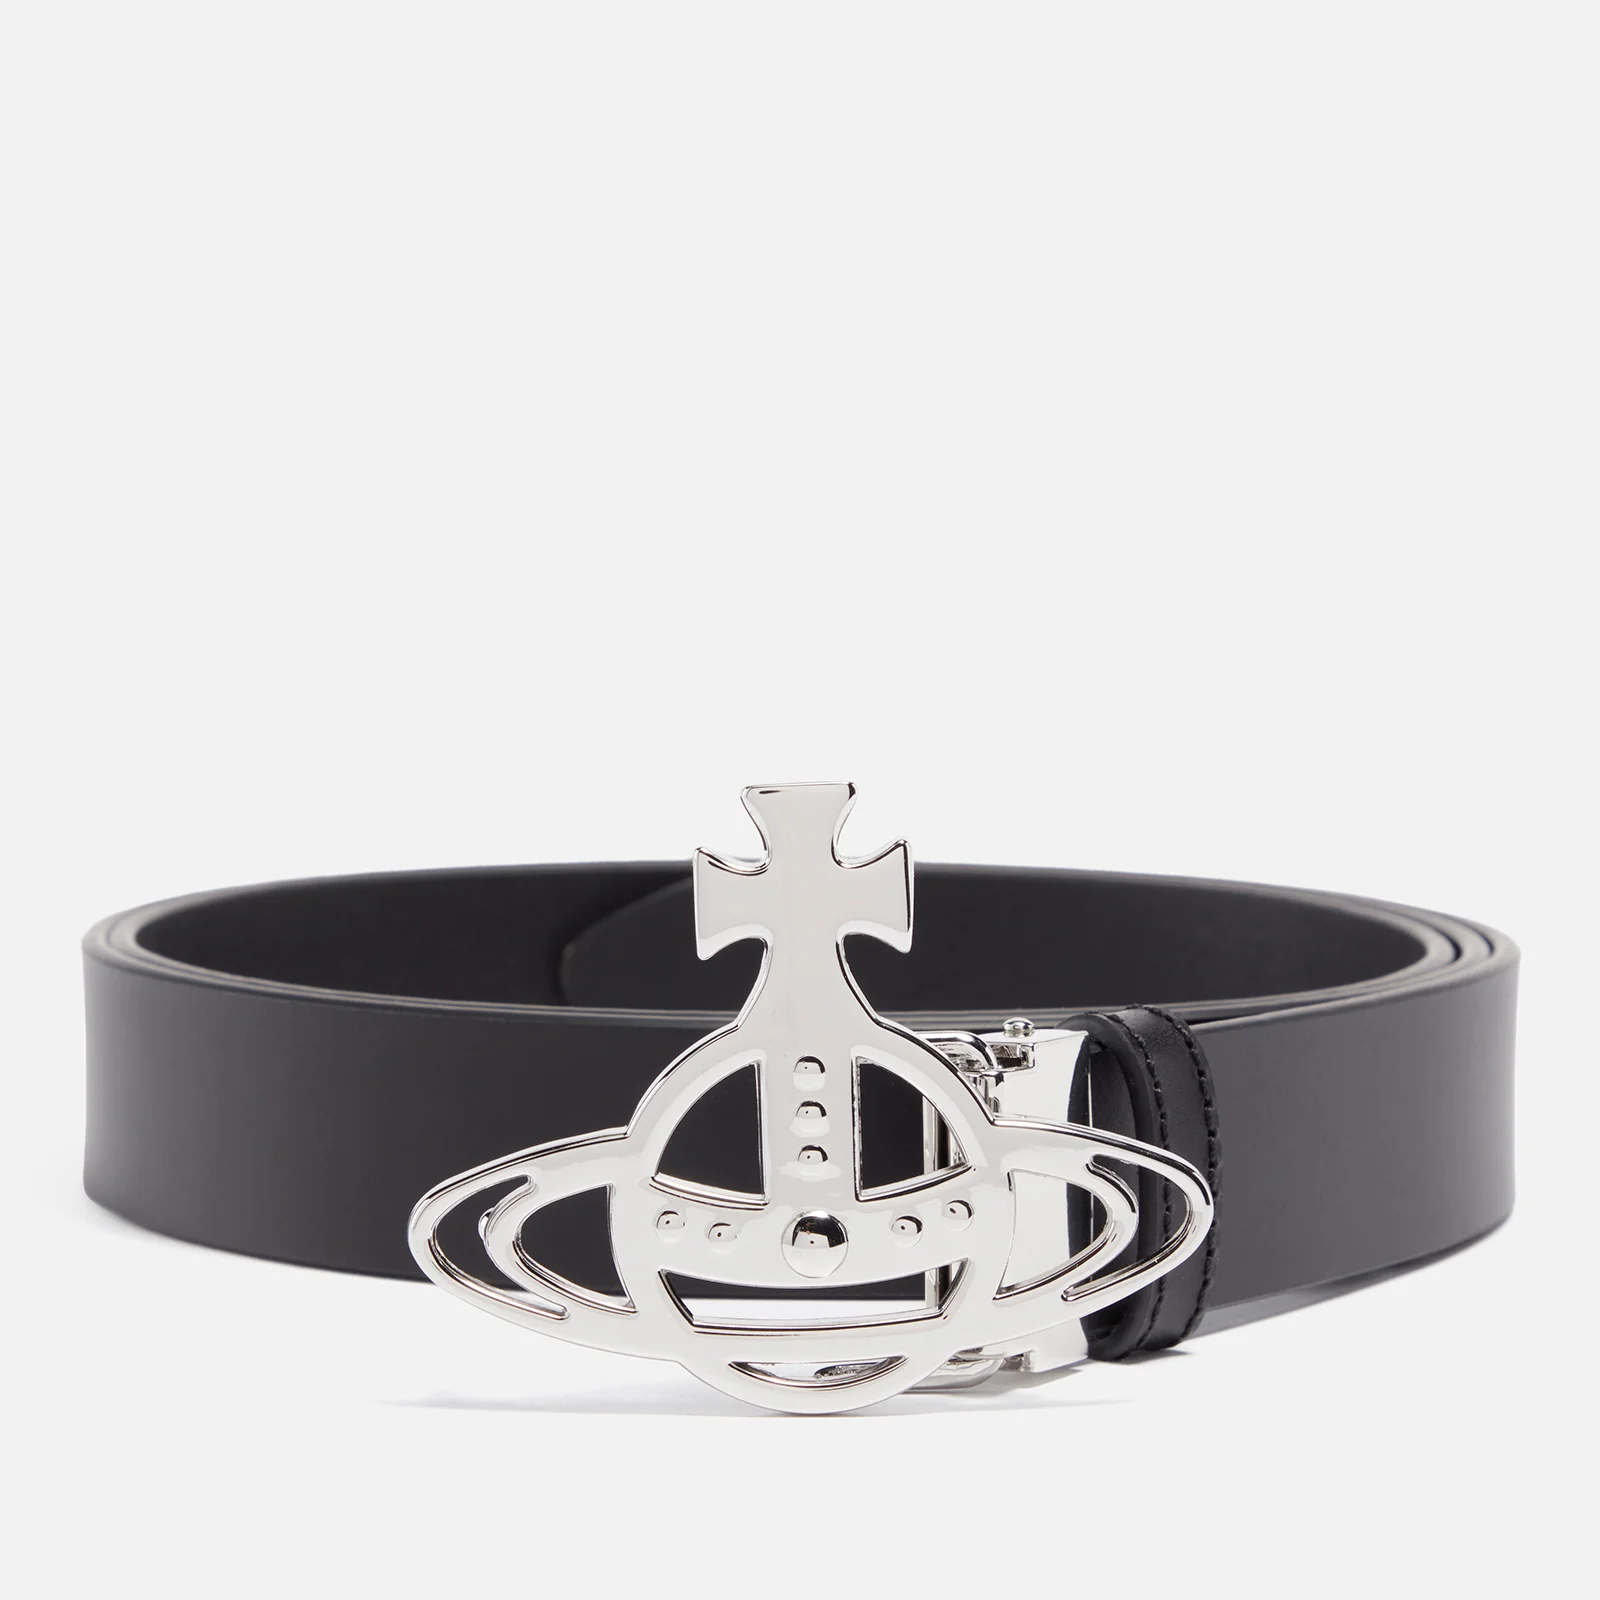 Vivienne Westwood Orb Leather Belt Image 1